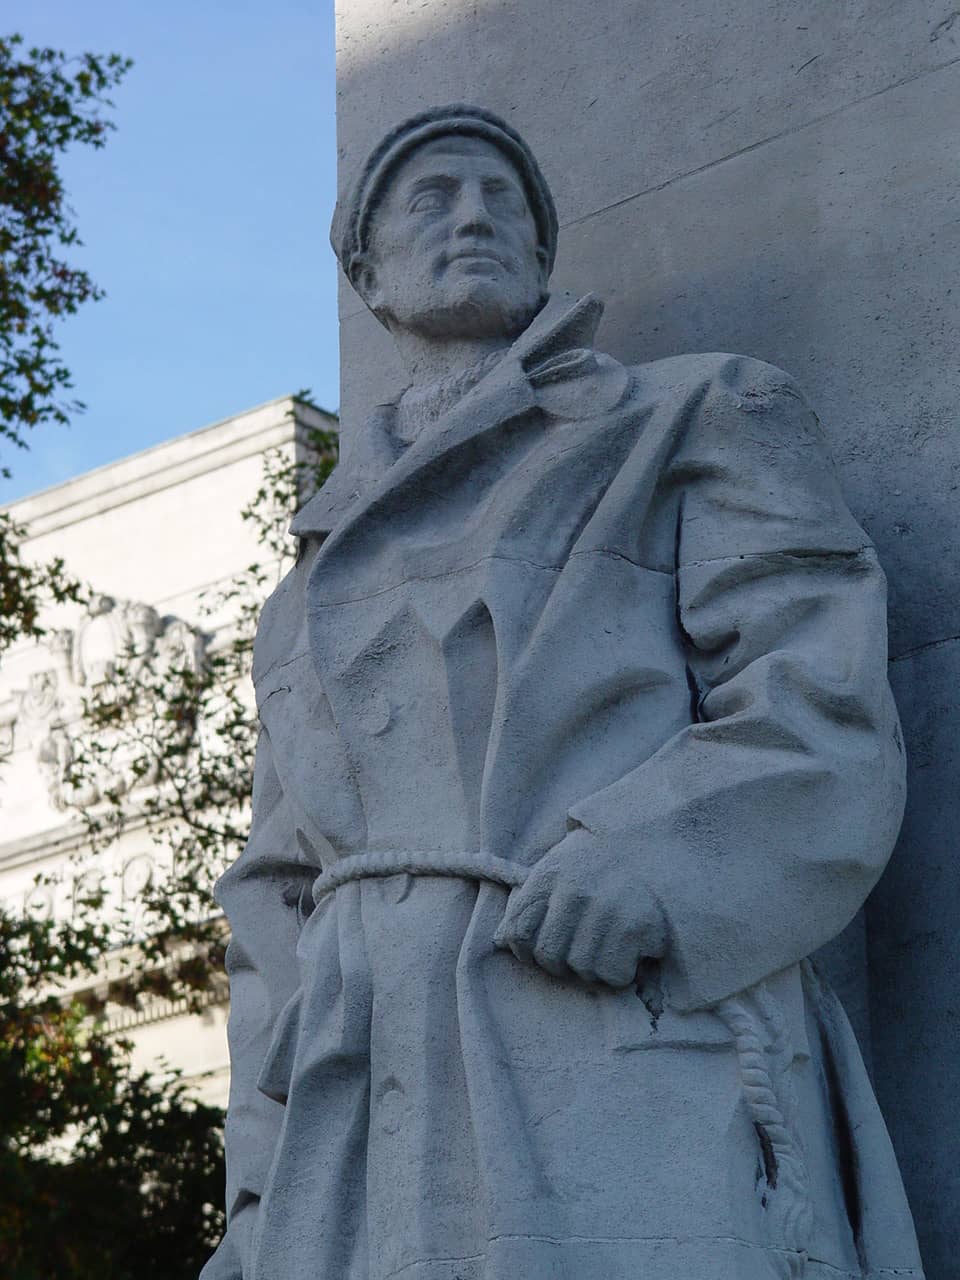 Merchant Navy seaman on the Merchant Seamen's Memorial in the City of London, England